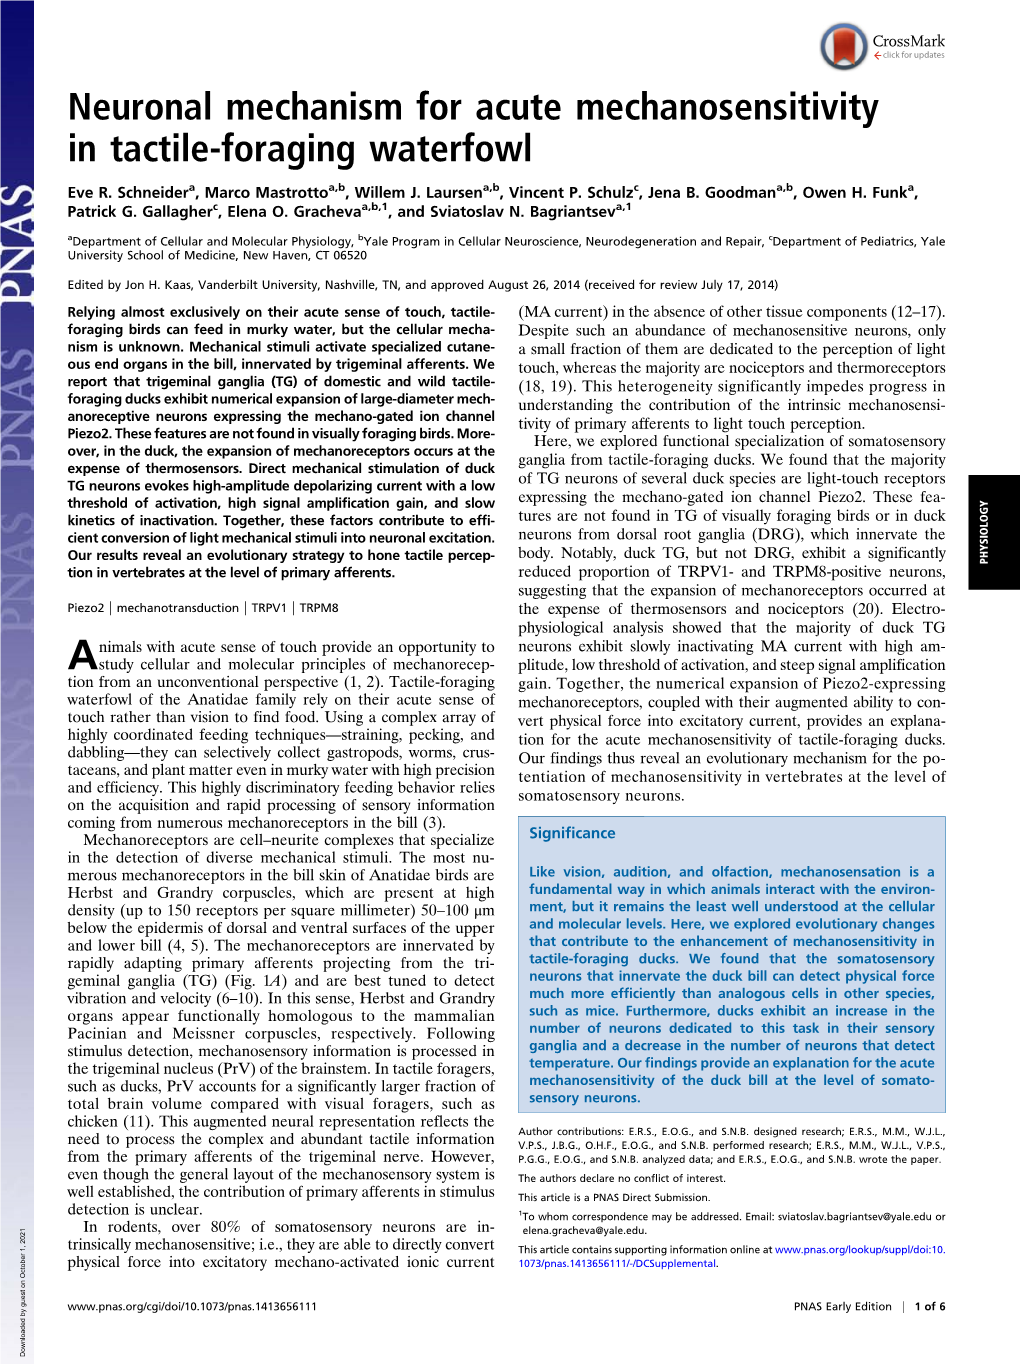 Neuronal Mechanism for Acute Mechanosensitivity in Tactile-Foraging Waterfowl